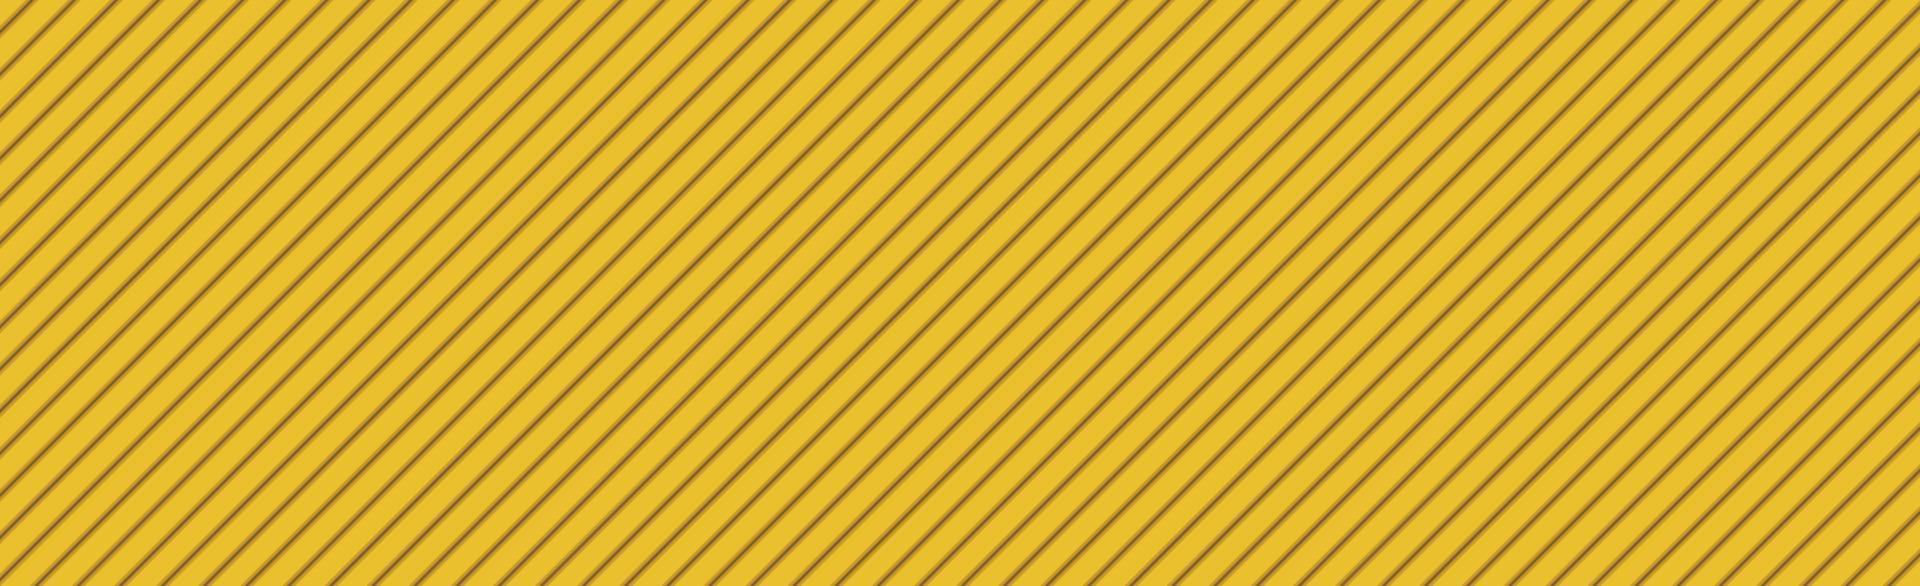 panorama abstrakt gul-orange textur bakgrund lutande linjer - vektor